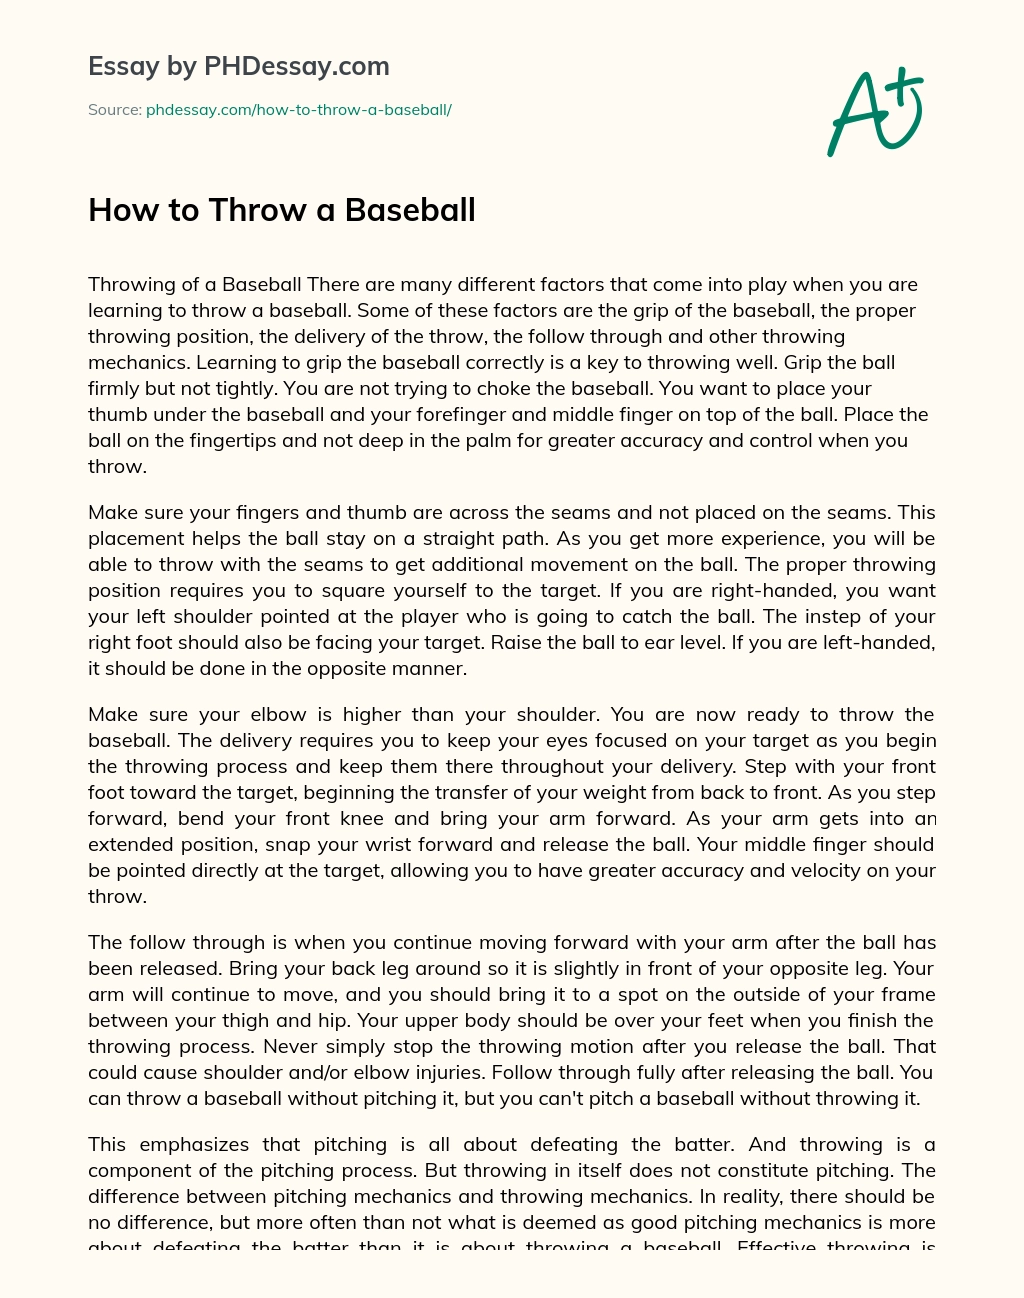 How to Throw a Baseball essay